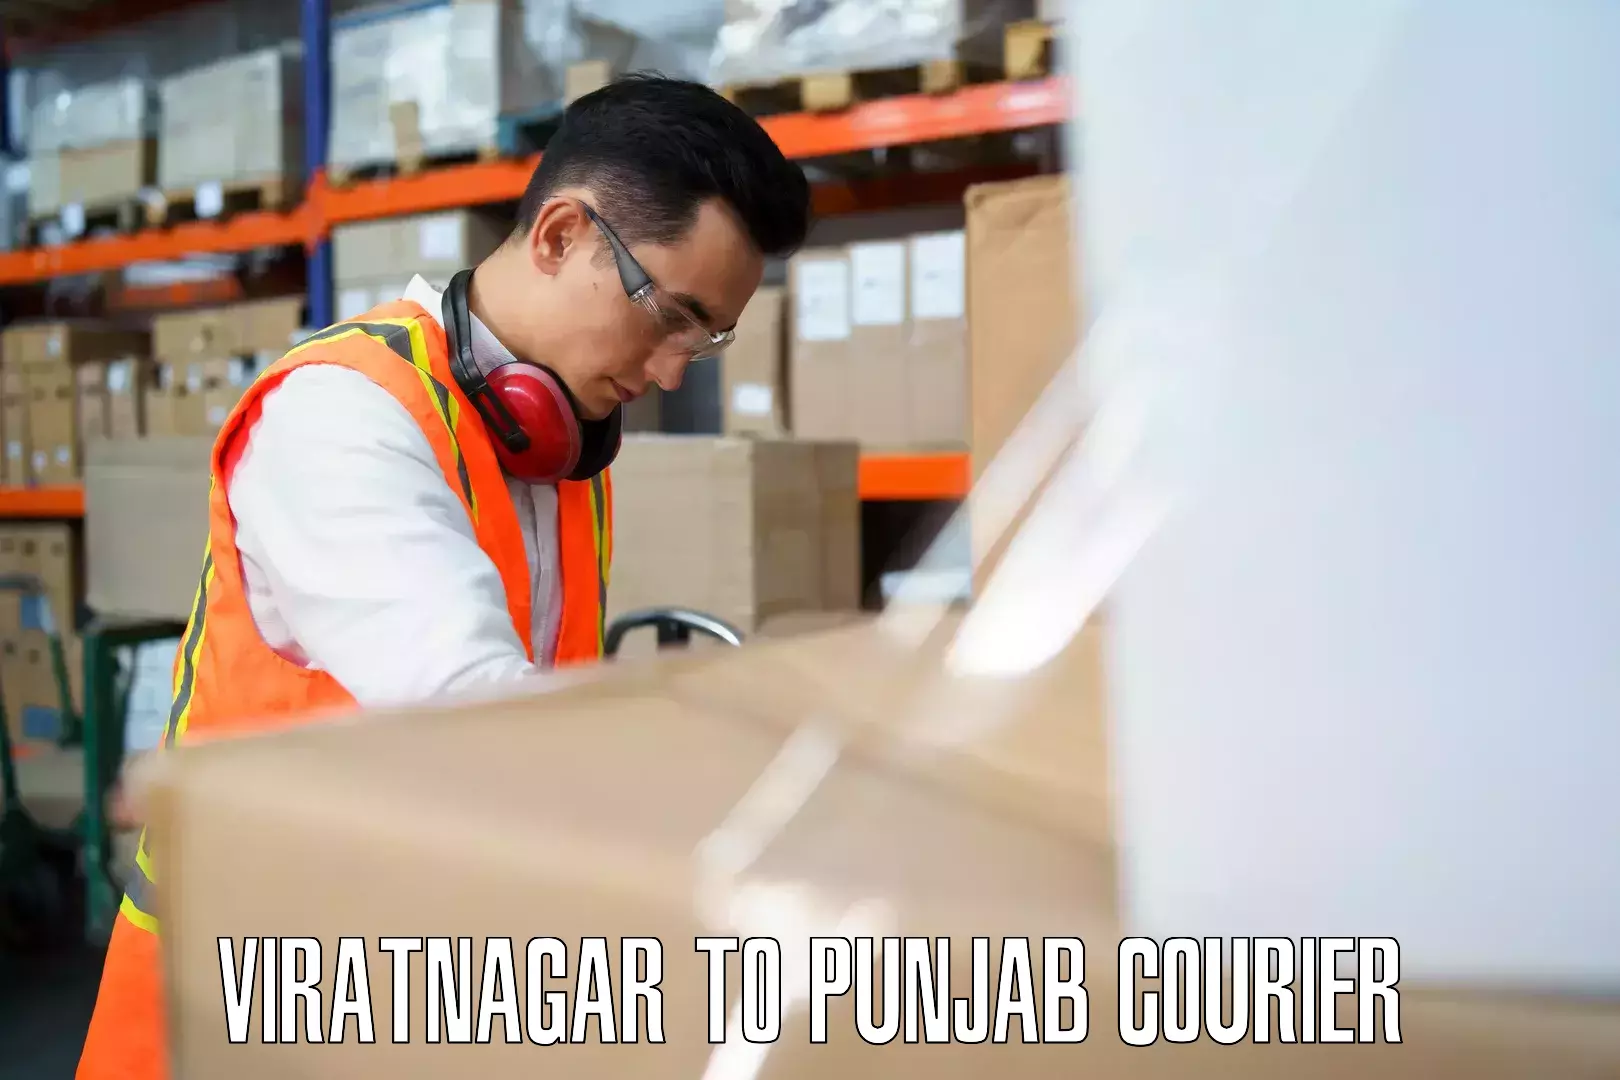 Luggage transport consultancy Viratnagar to Pathankot